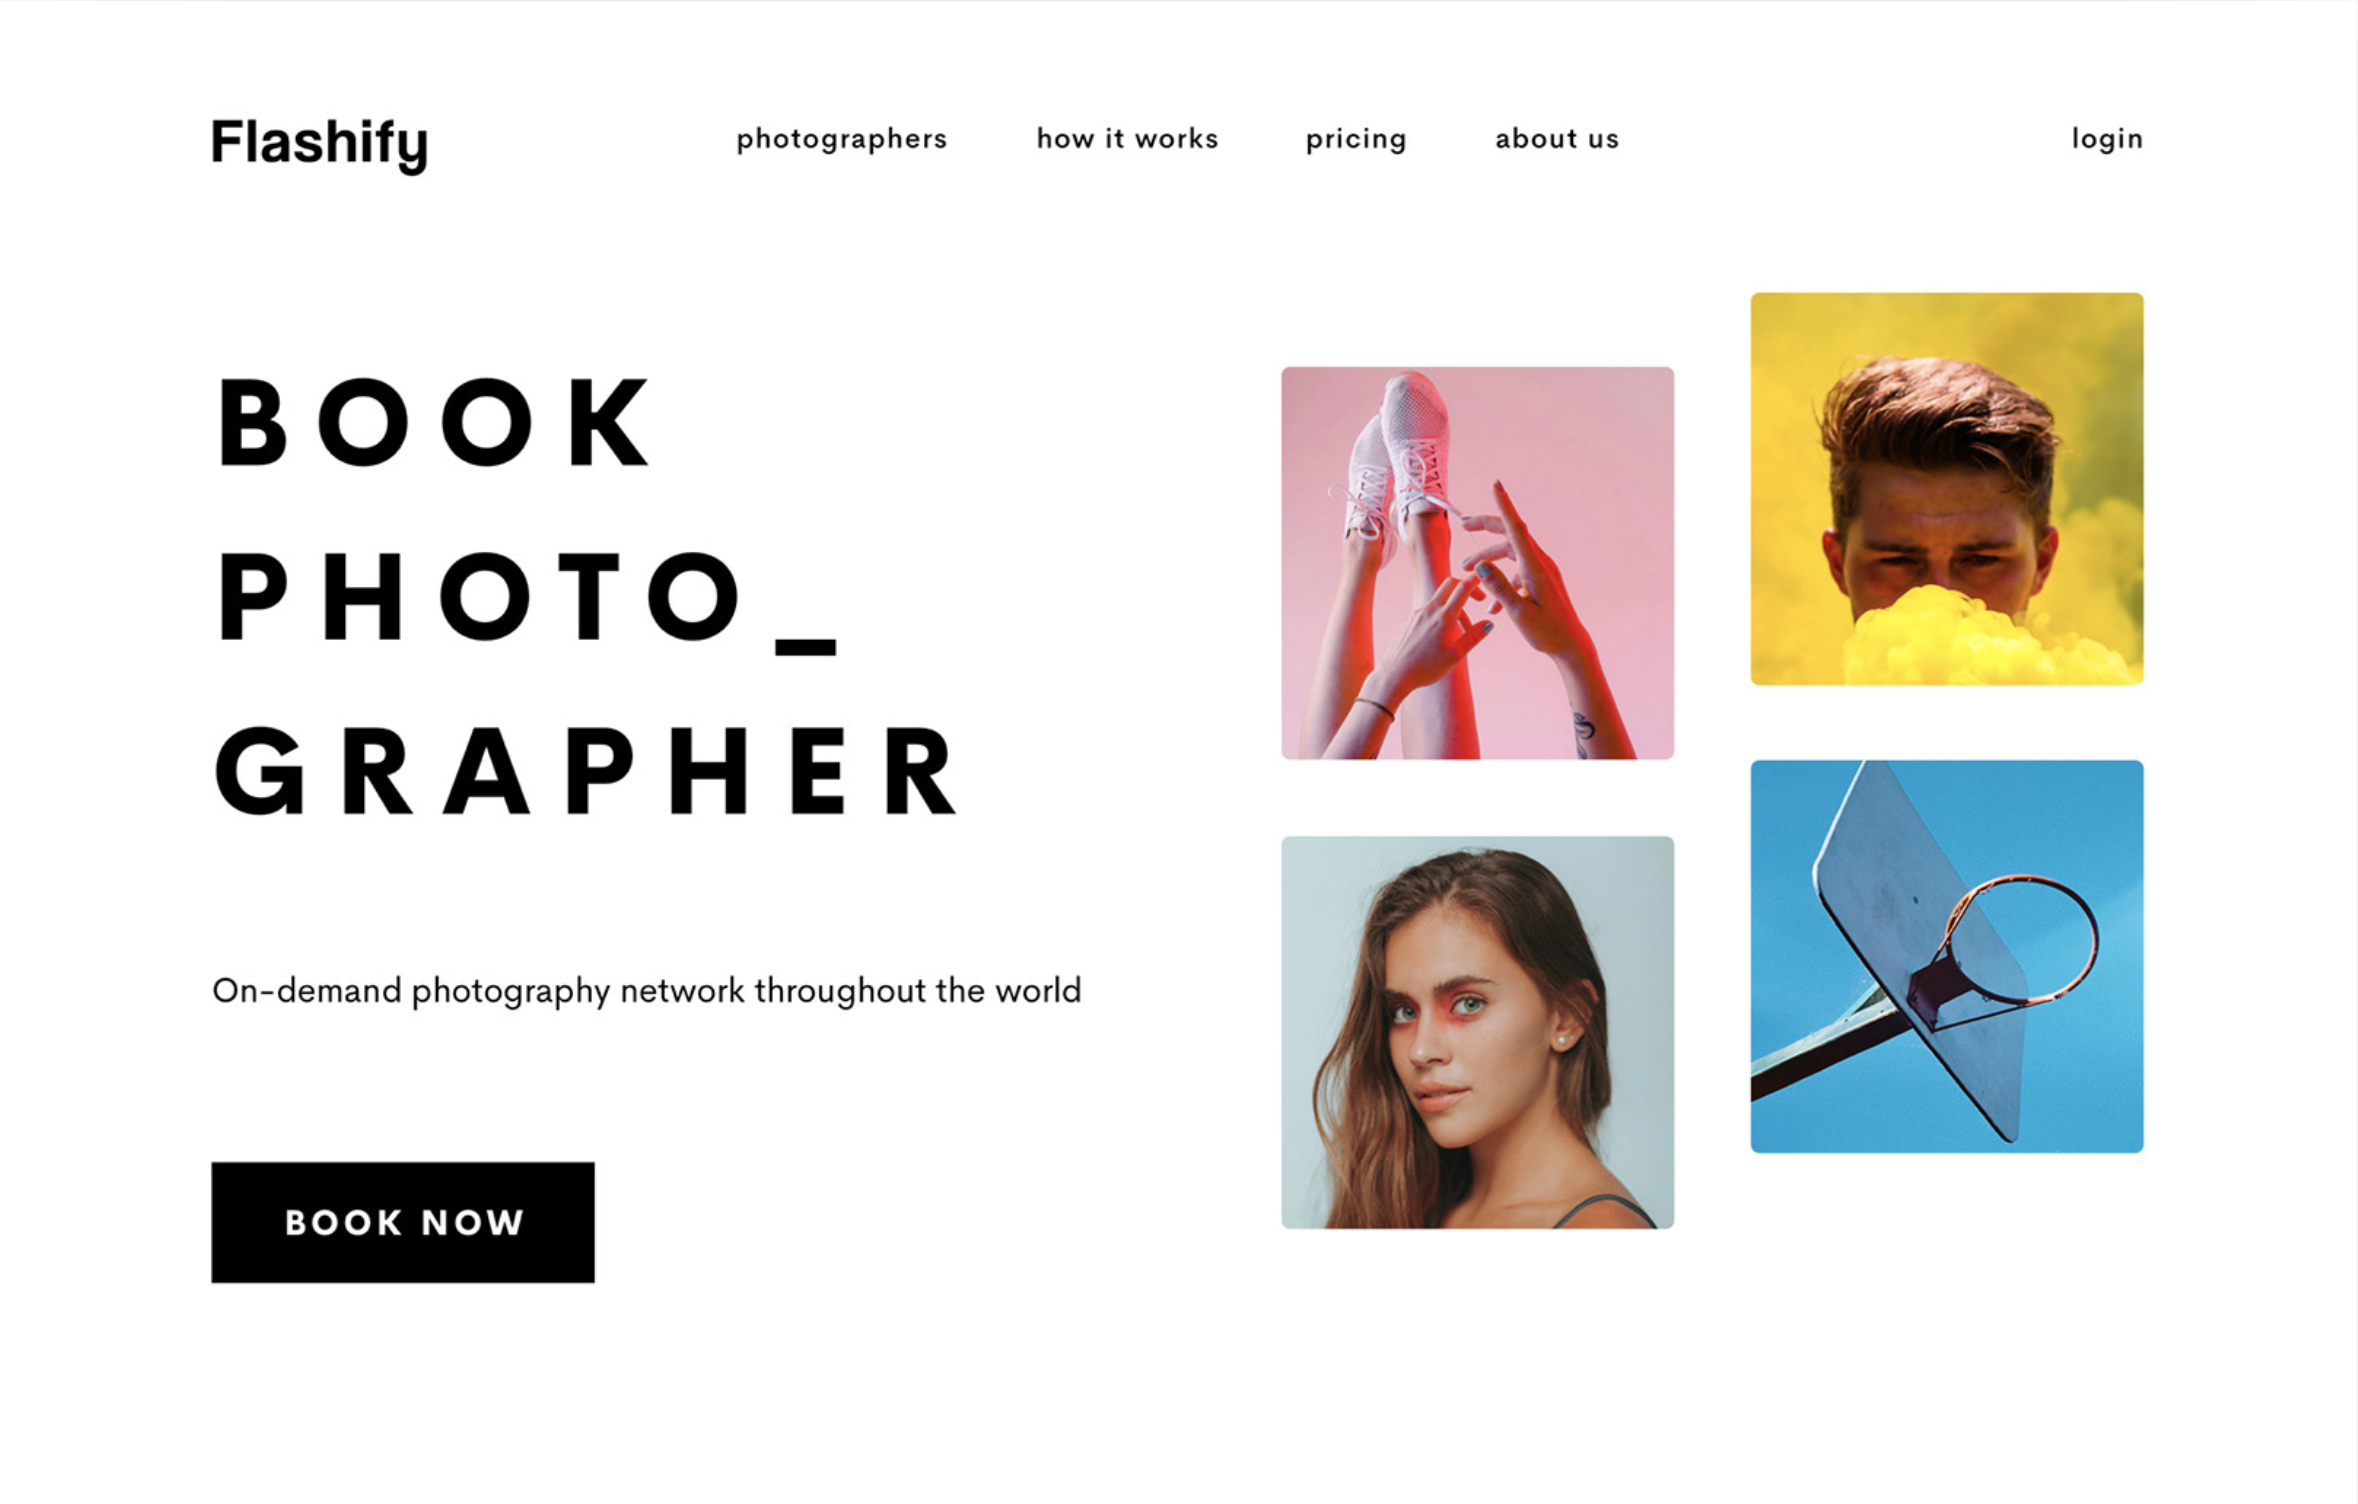 FLASHIFY: Photographer Booking Platform